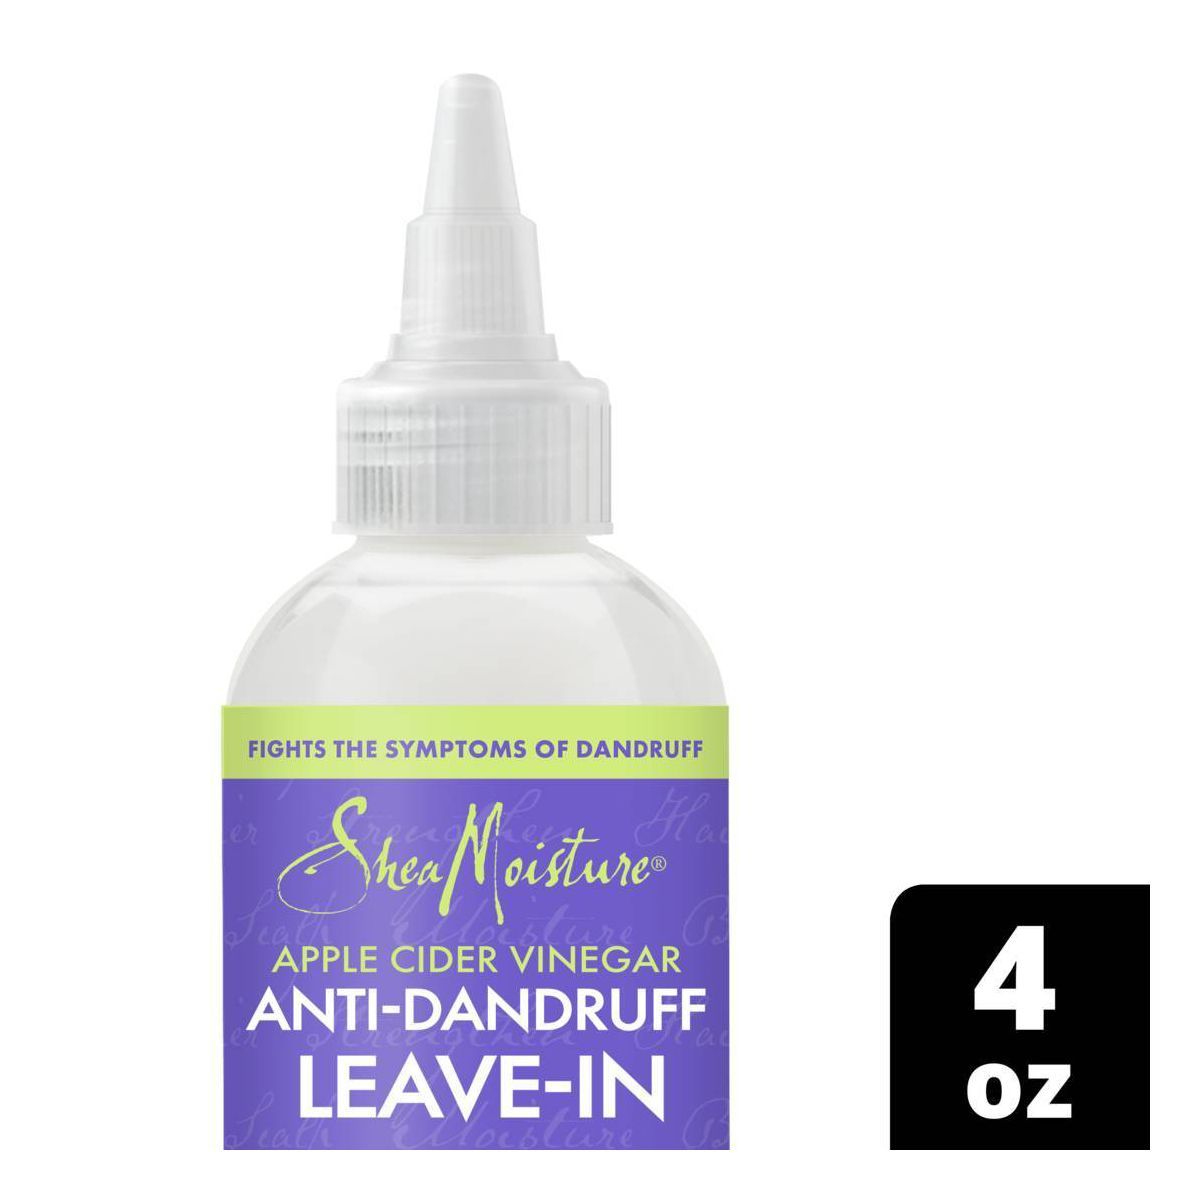 SheaMoisture Apple Cider Vinegar Anti-Dandruff Leave-In Hair Care System - 4 fl oz | Target